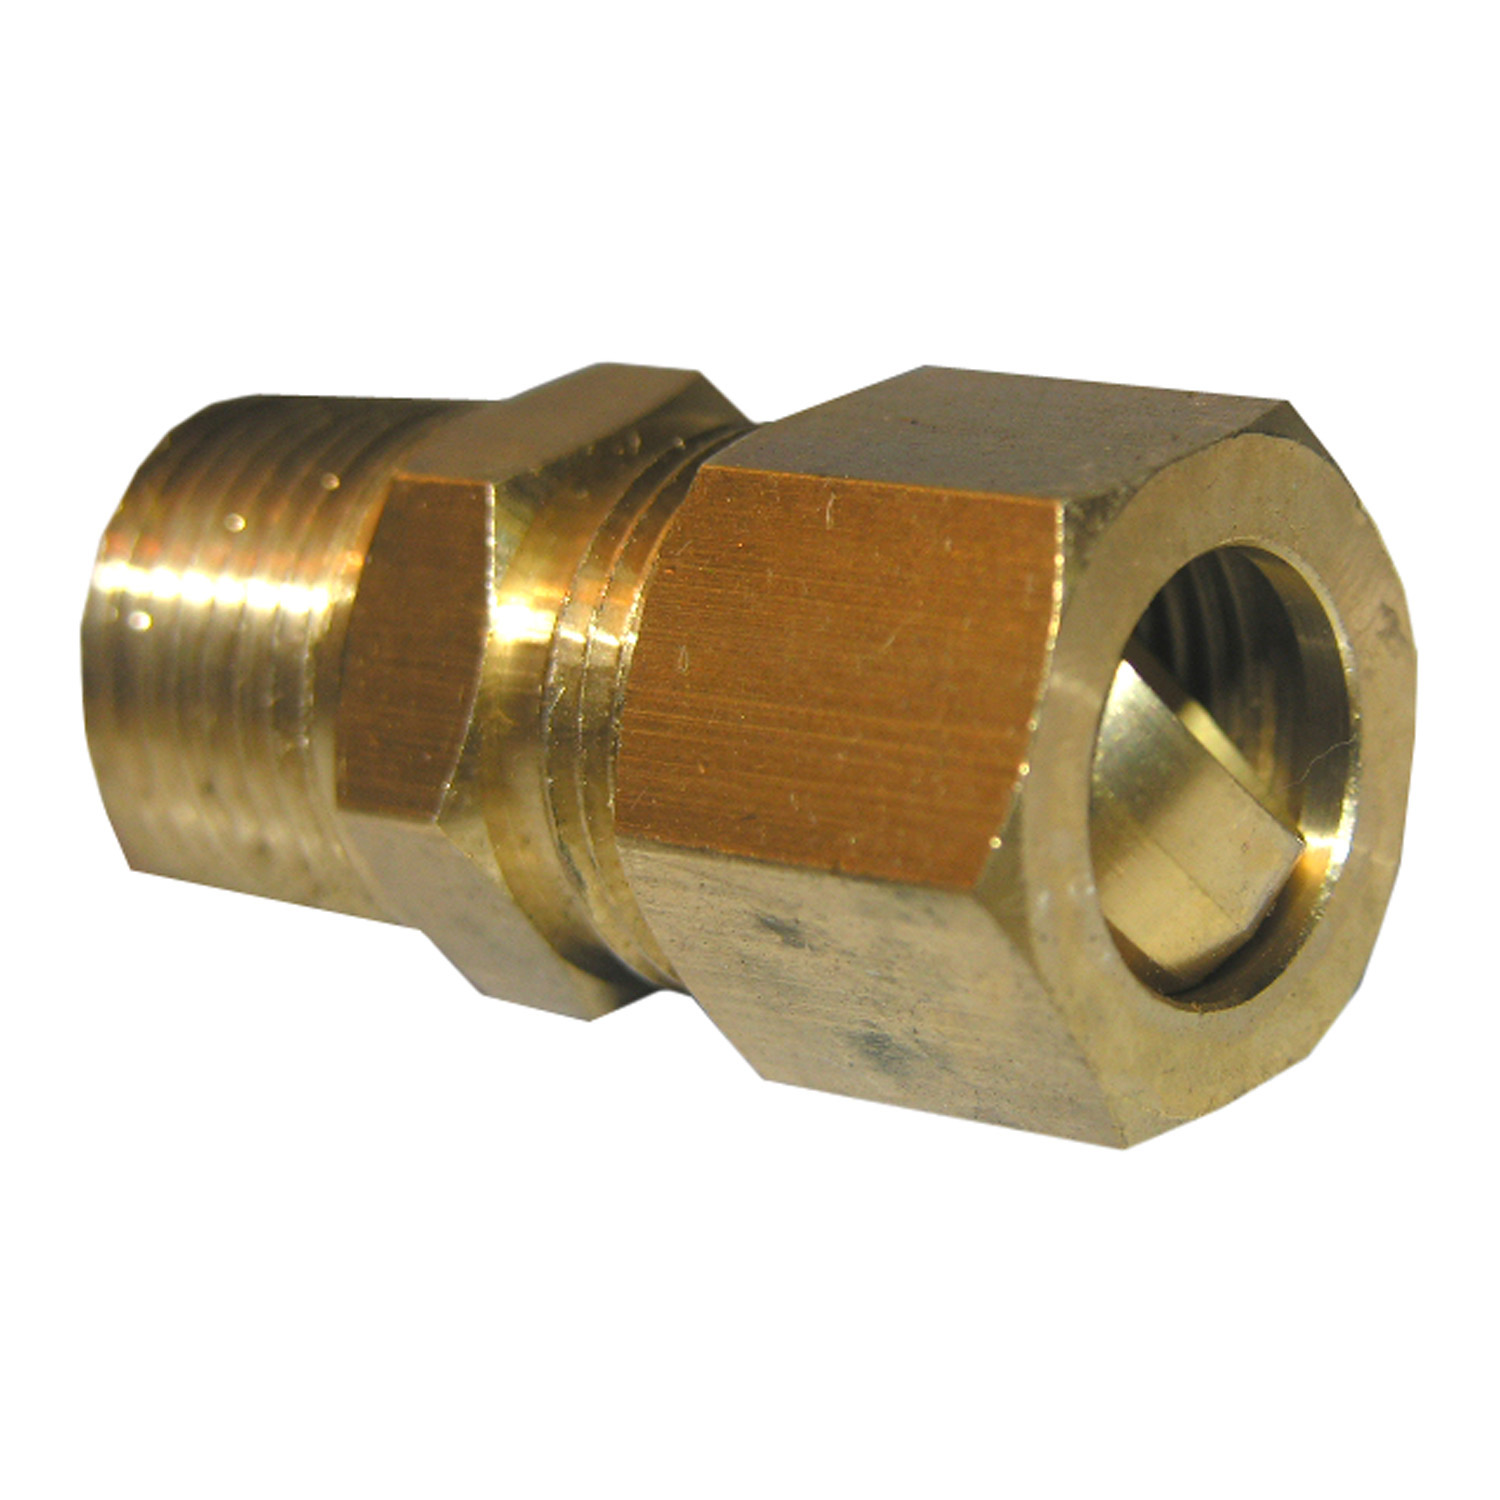 17-6851 Pipe Adapter, 1/2 in, Compression x MPT, Brass, 200 psi Pressure